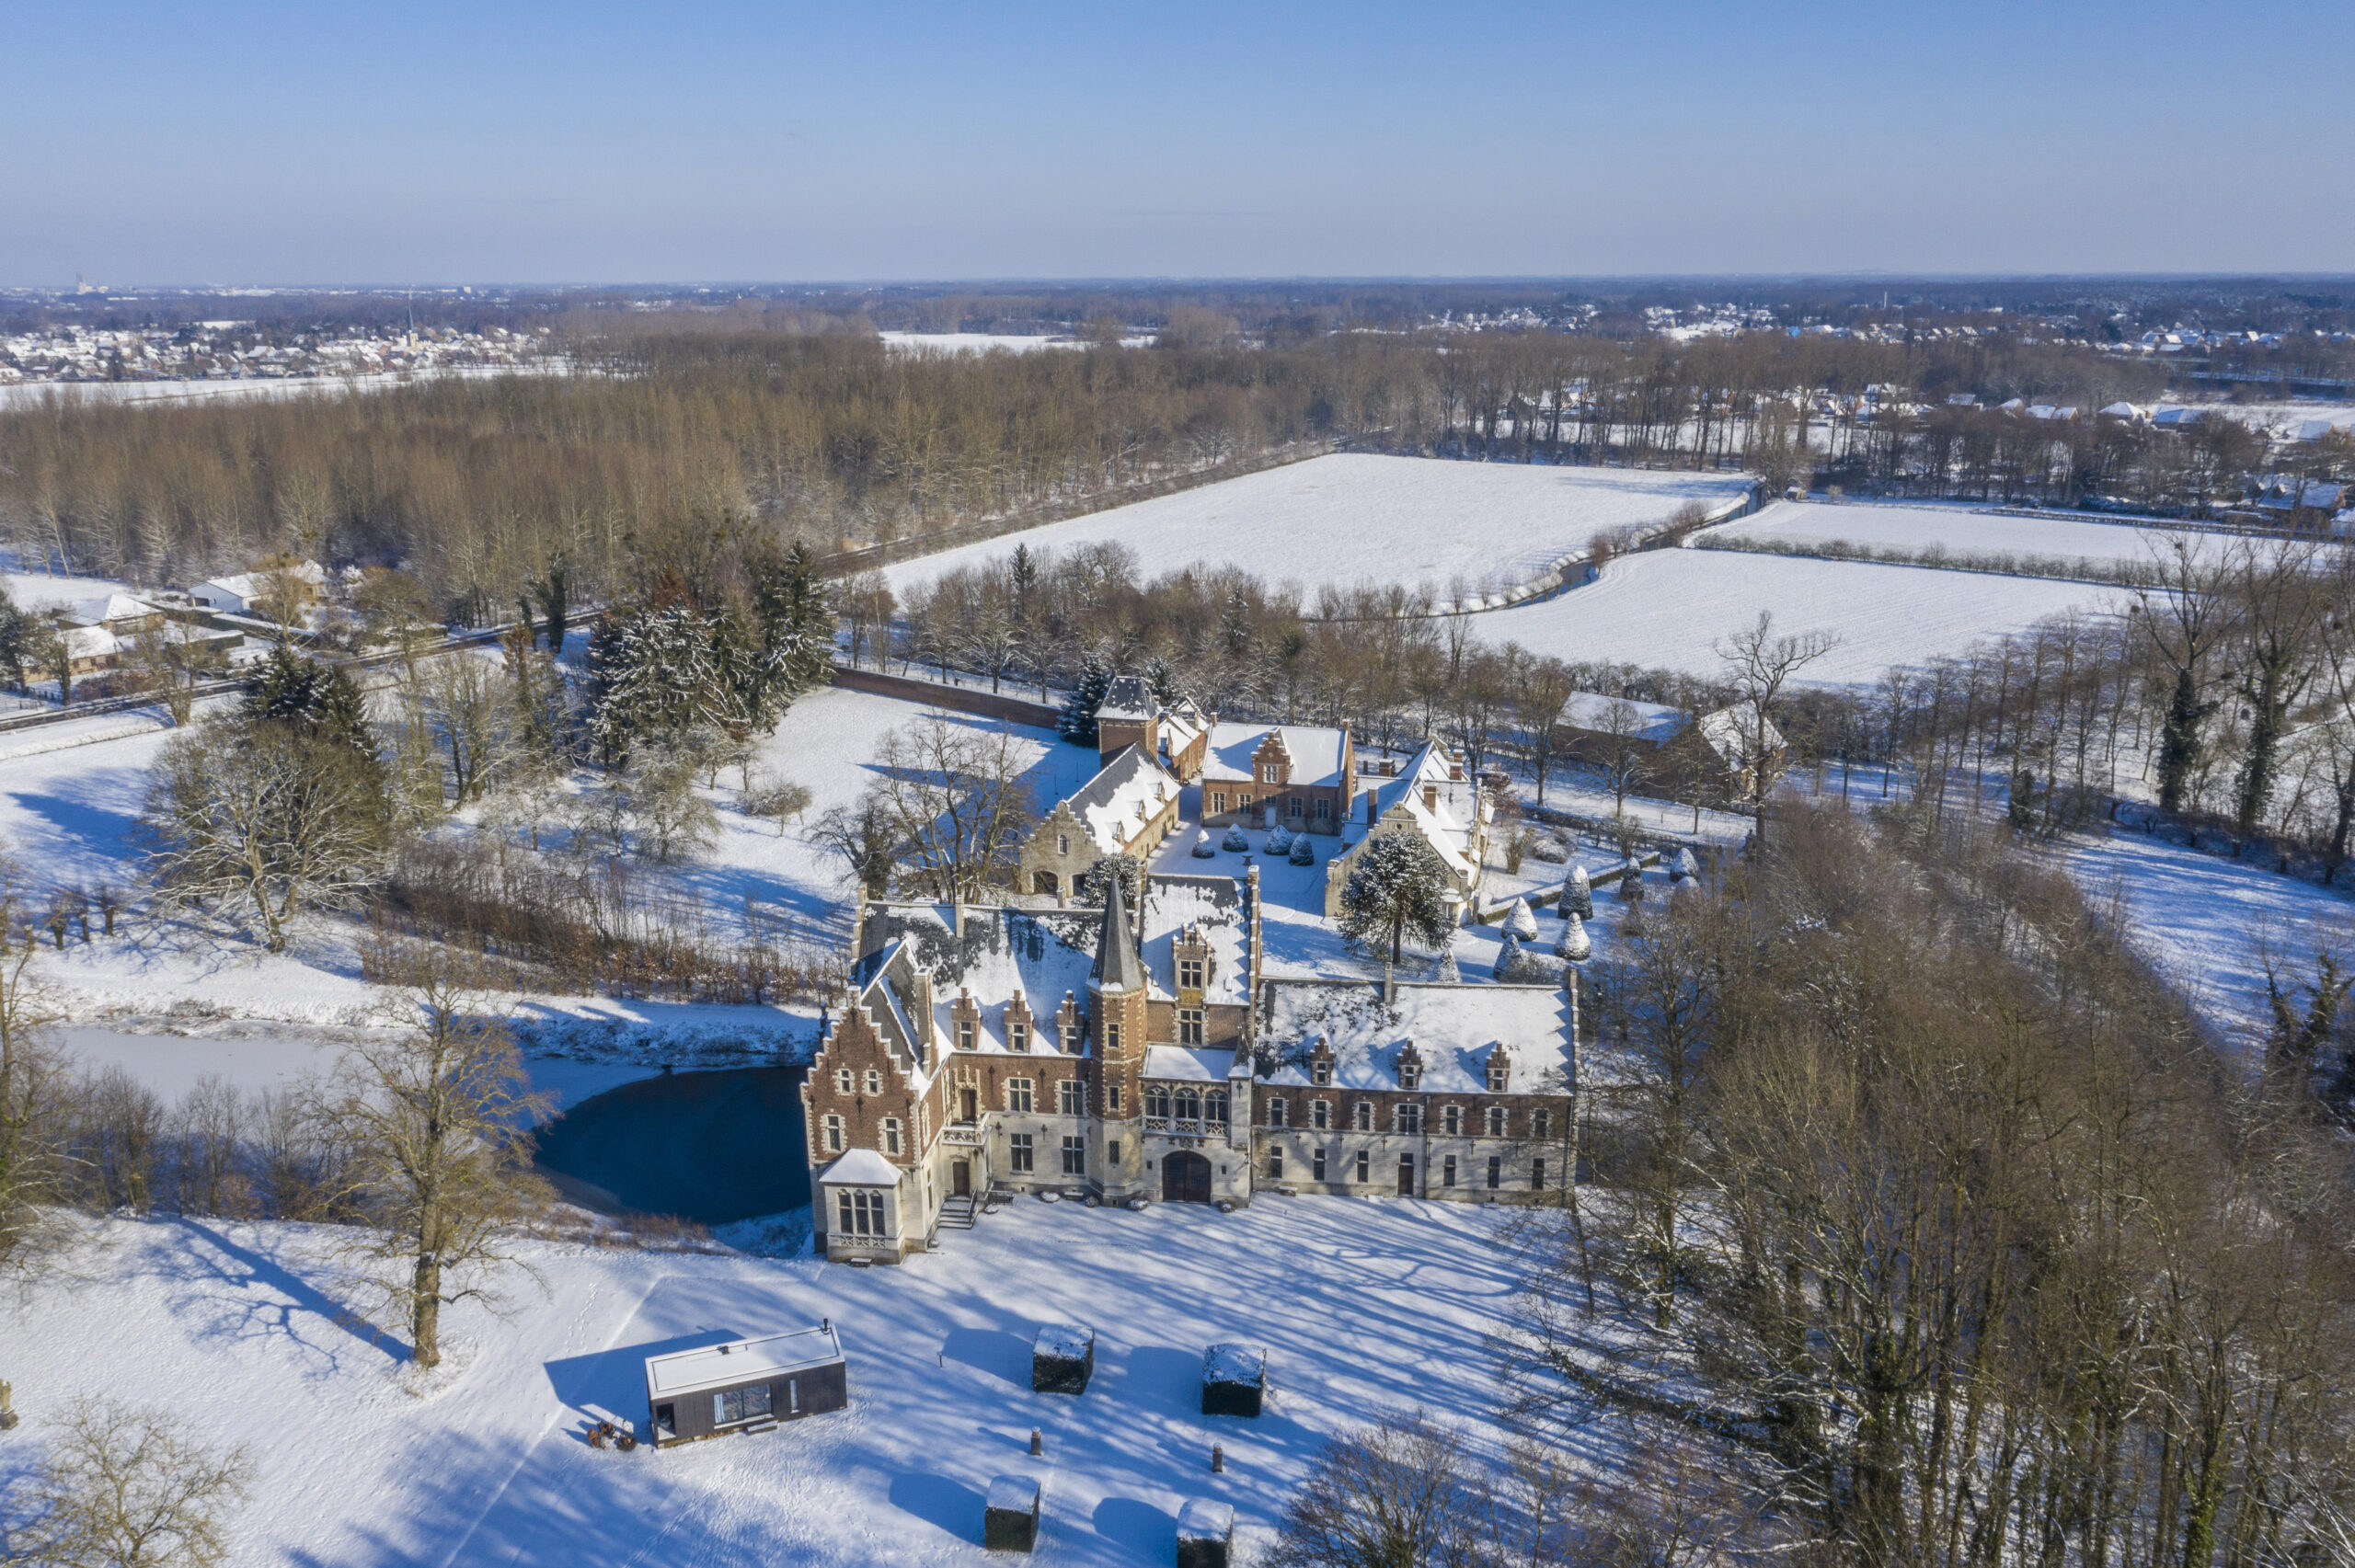 Rubens Castle, Elewijt, captured by drone in snow.